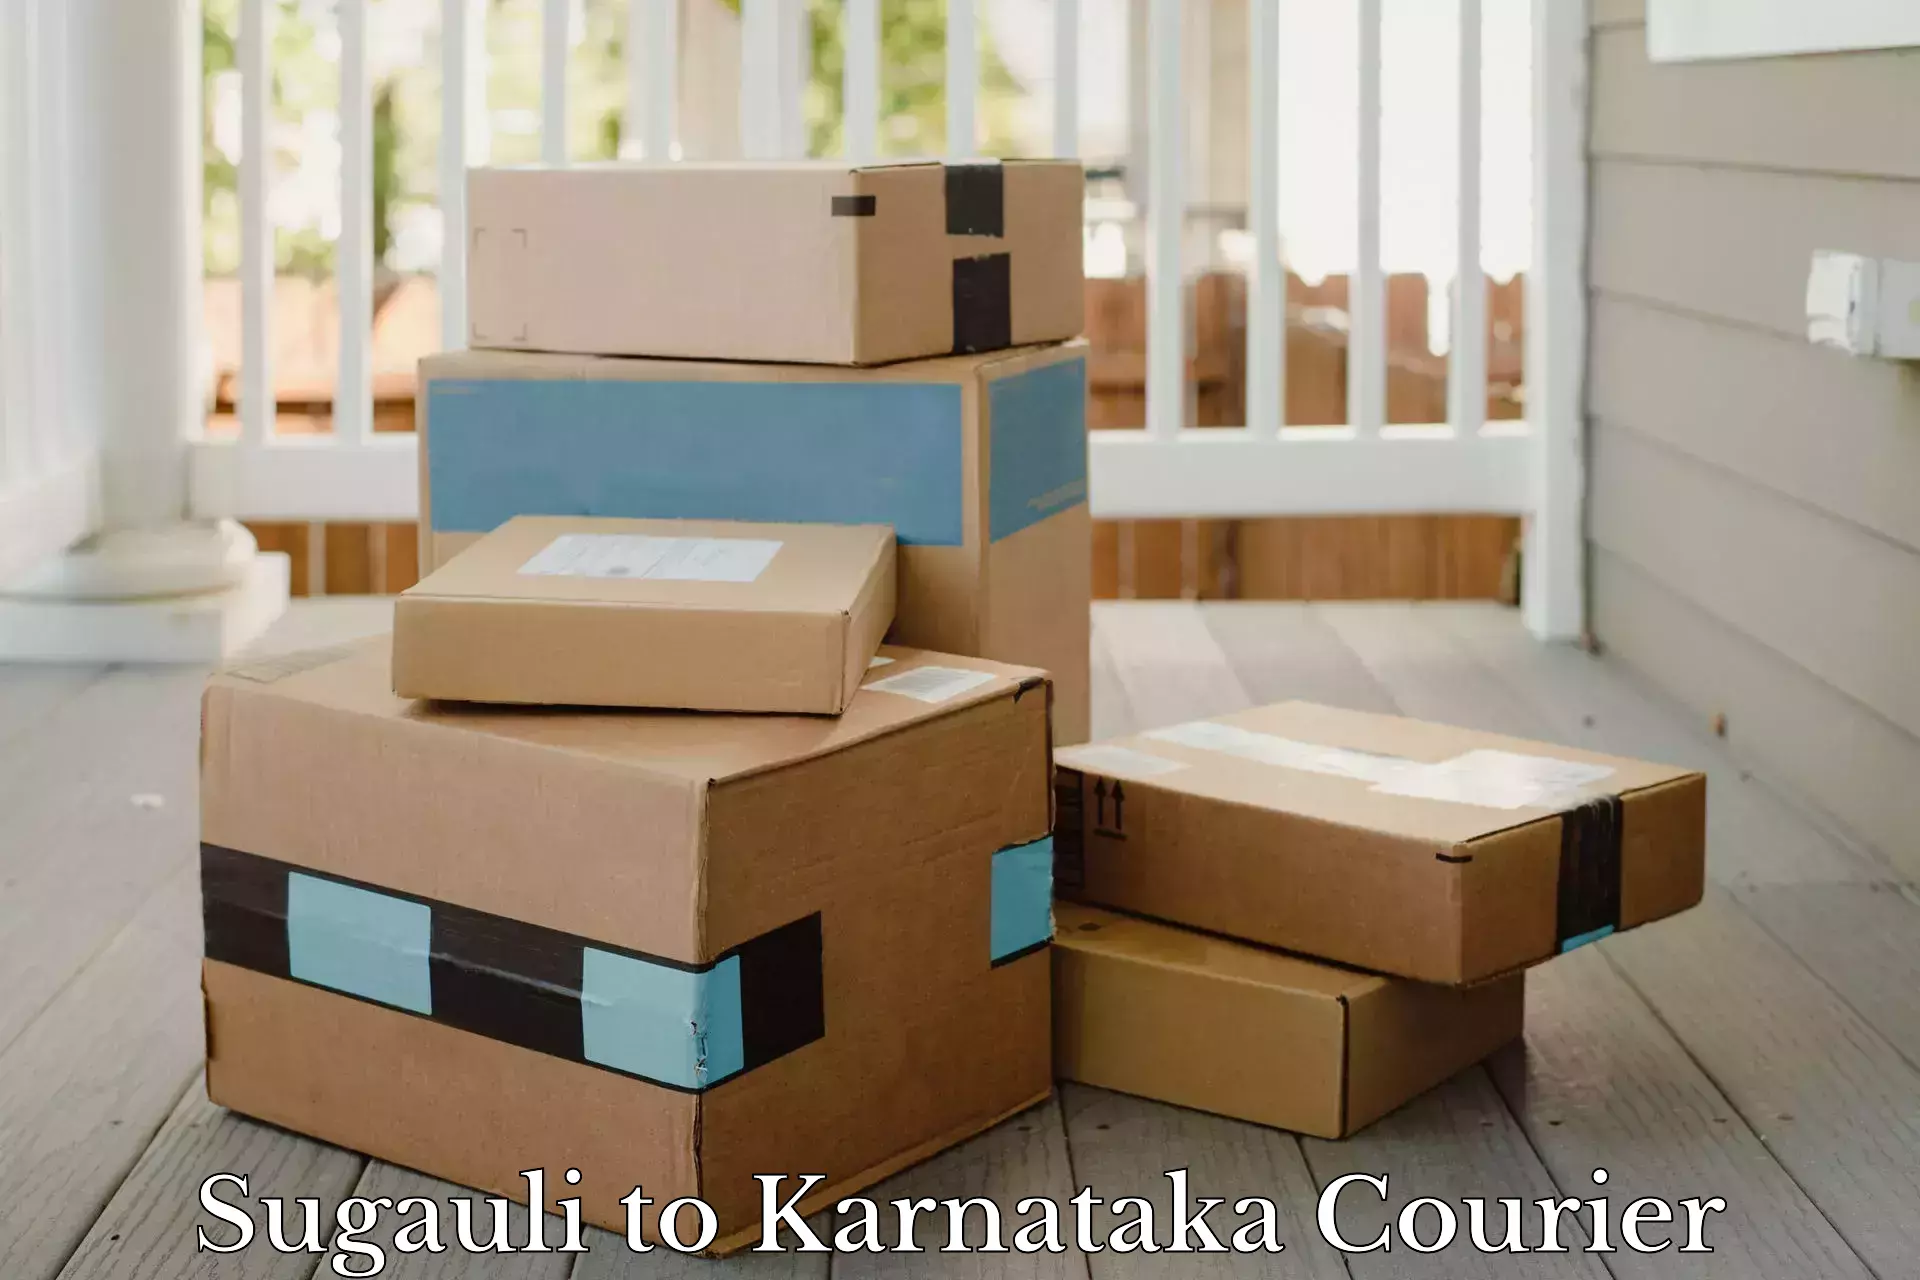 Courier service innovation Sugauli to Karnataka